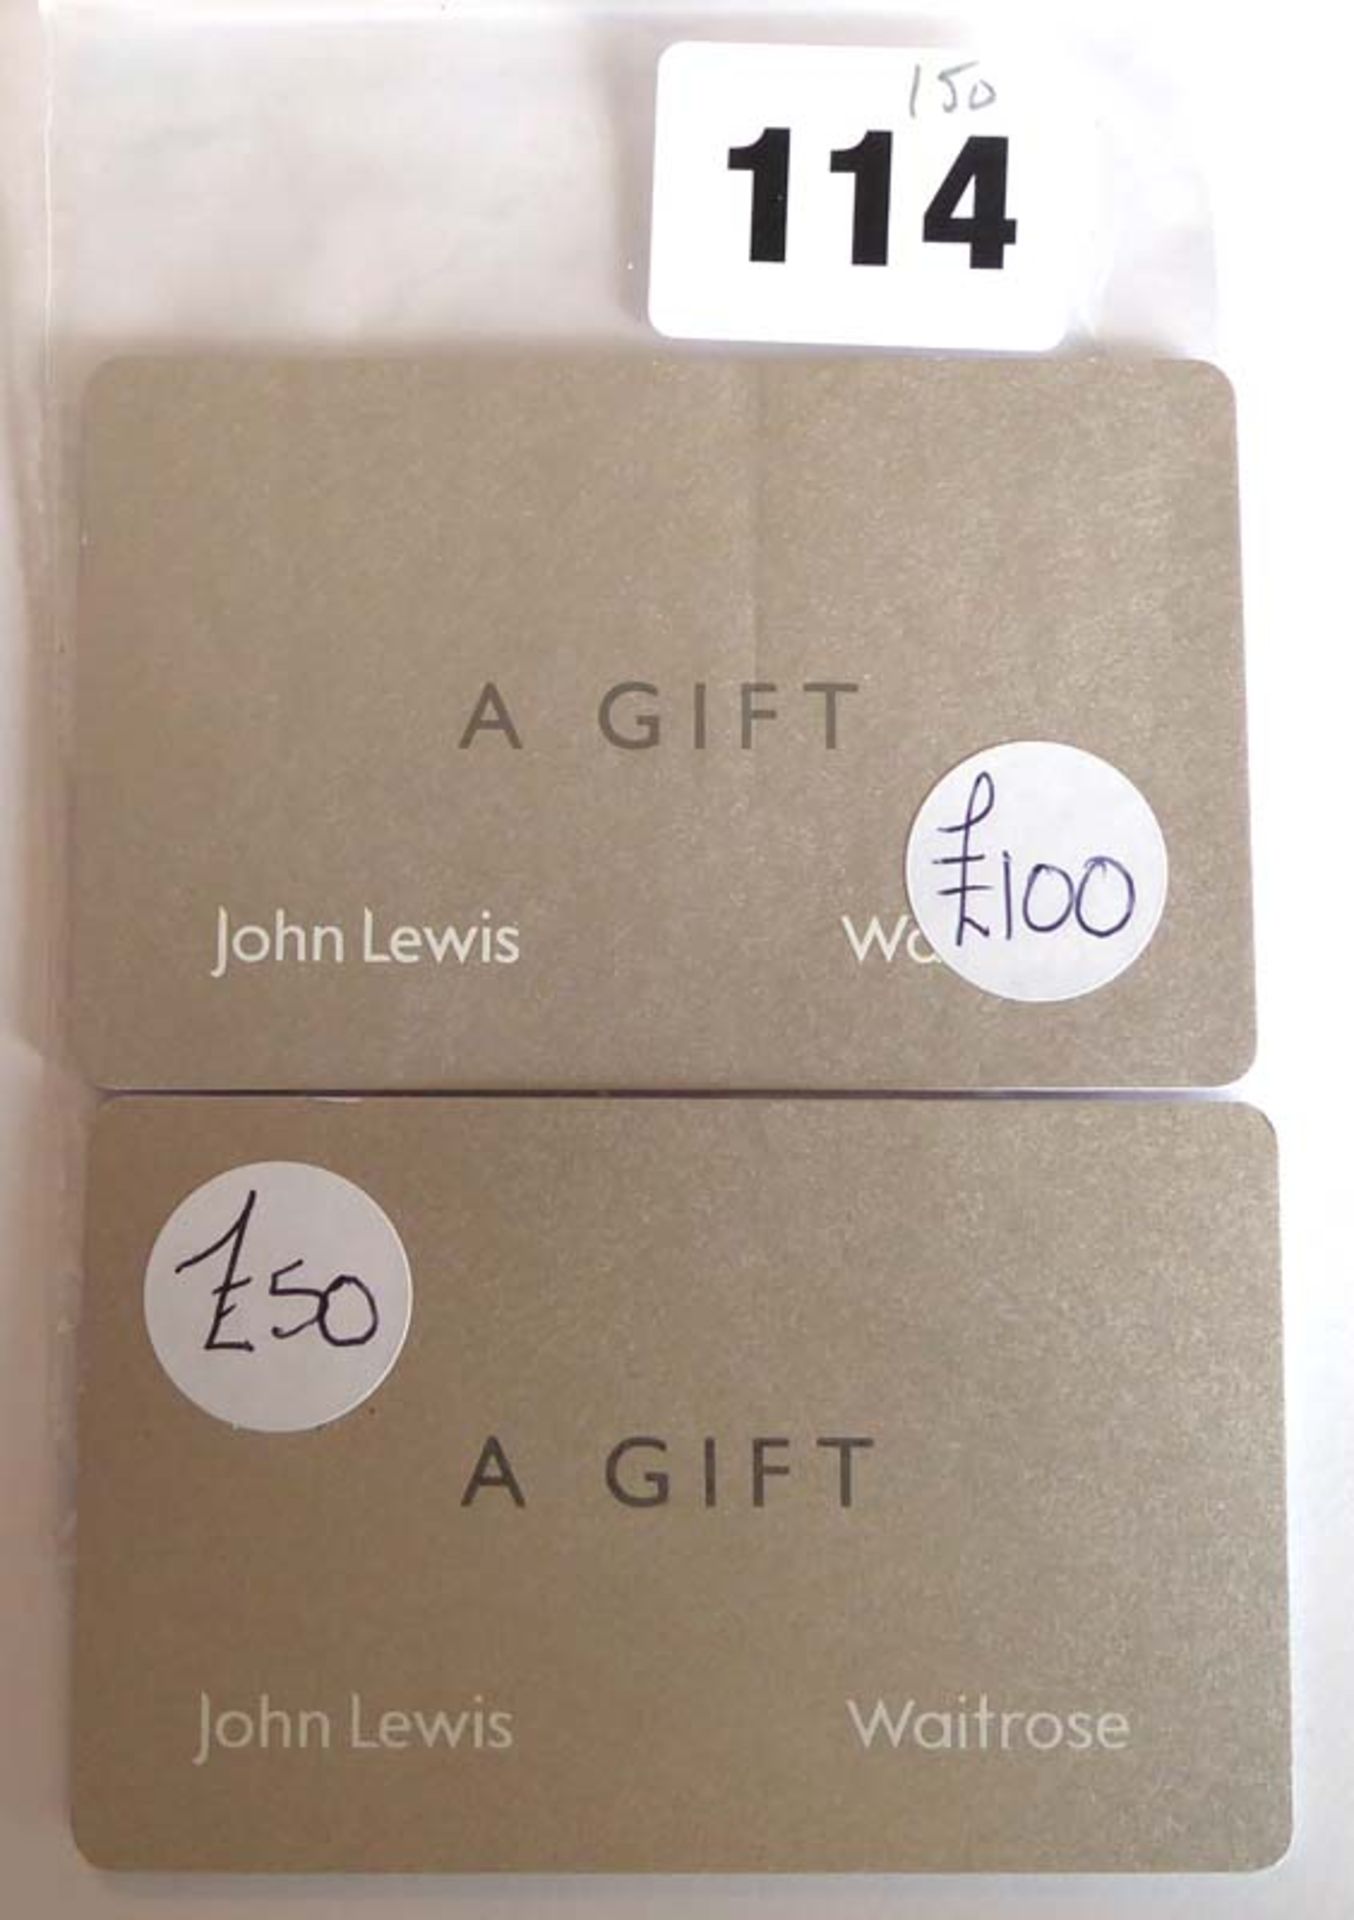 John Lewis (x2) - Total face value £150